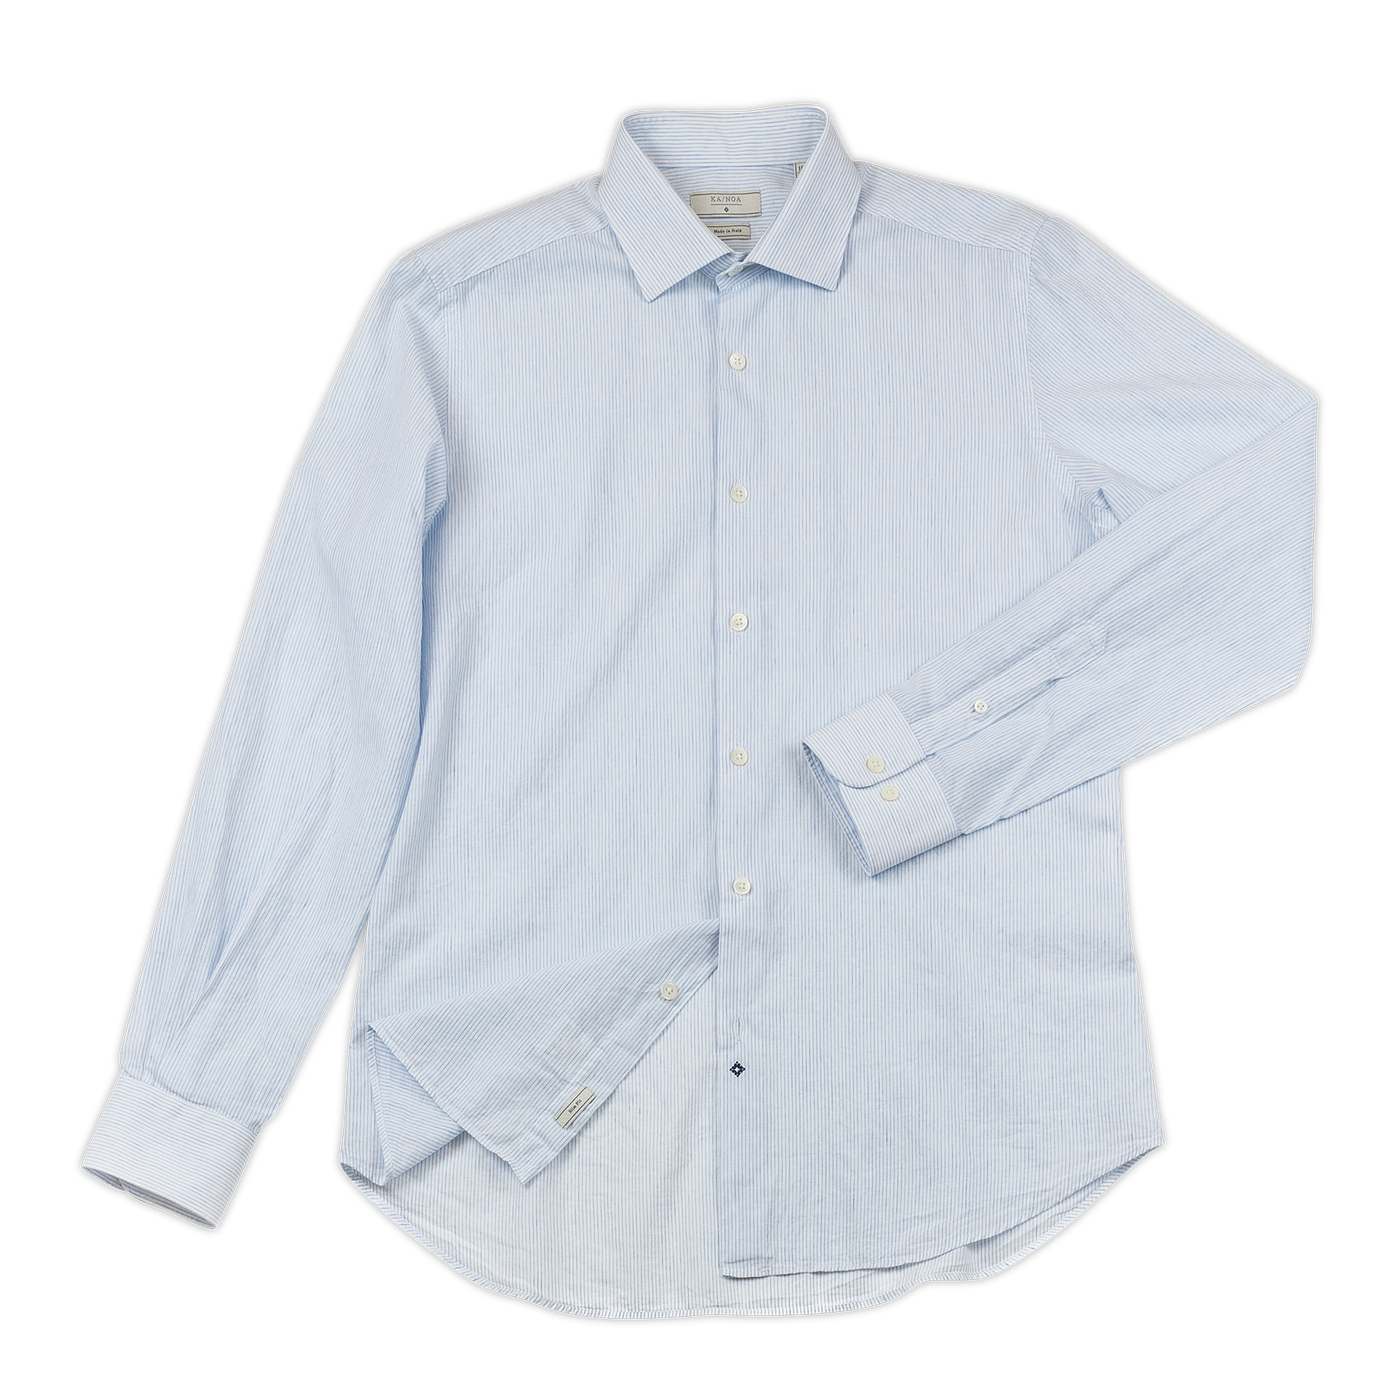 Clamenc Soft Stripe shirt (linen and cotton)